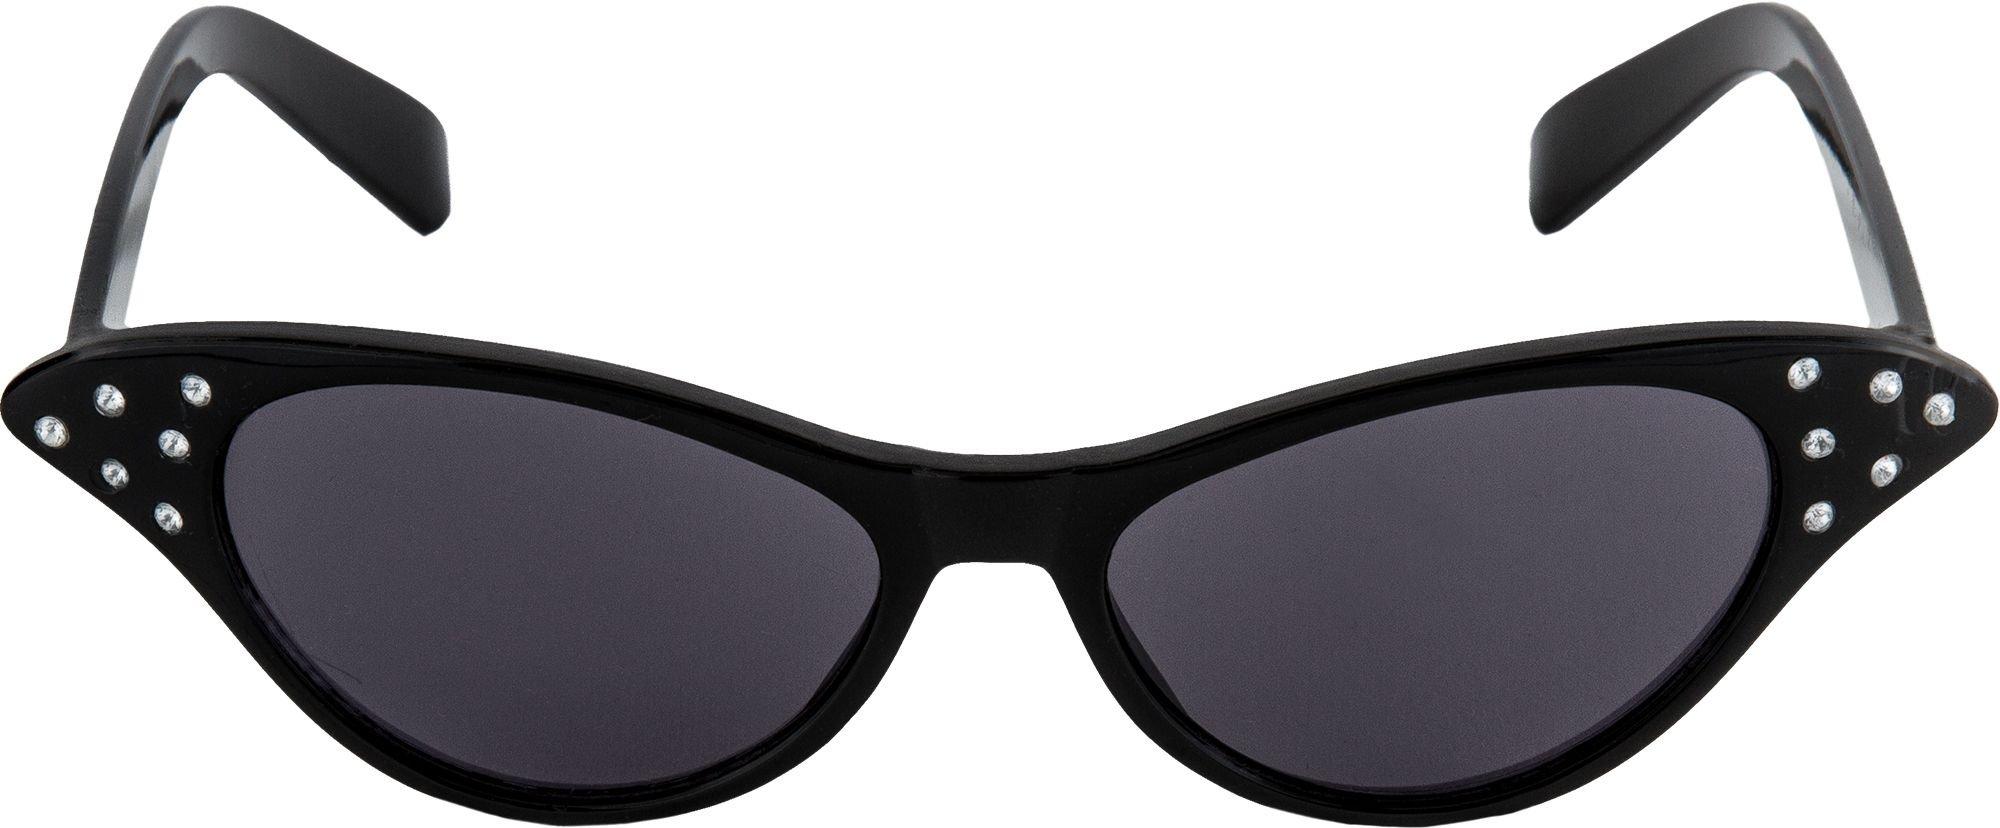 Eyegla Womens Cat Eye Sunglasses Bulk Party Favors Glasses Retro Vintage Clout Goggles Plastic Frame 10 Pack, Black Cateye Sung